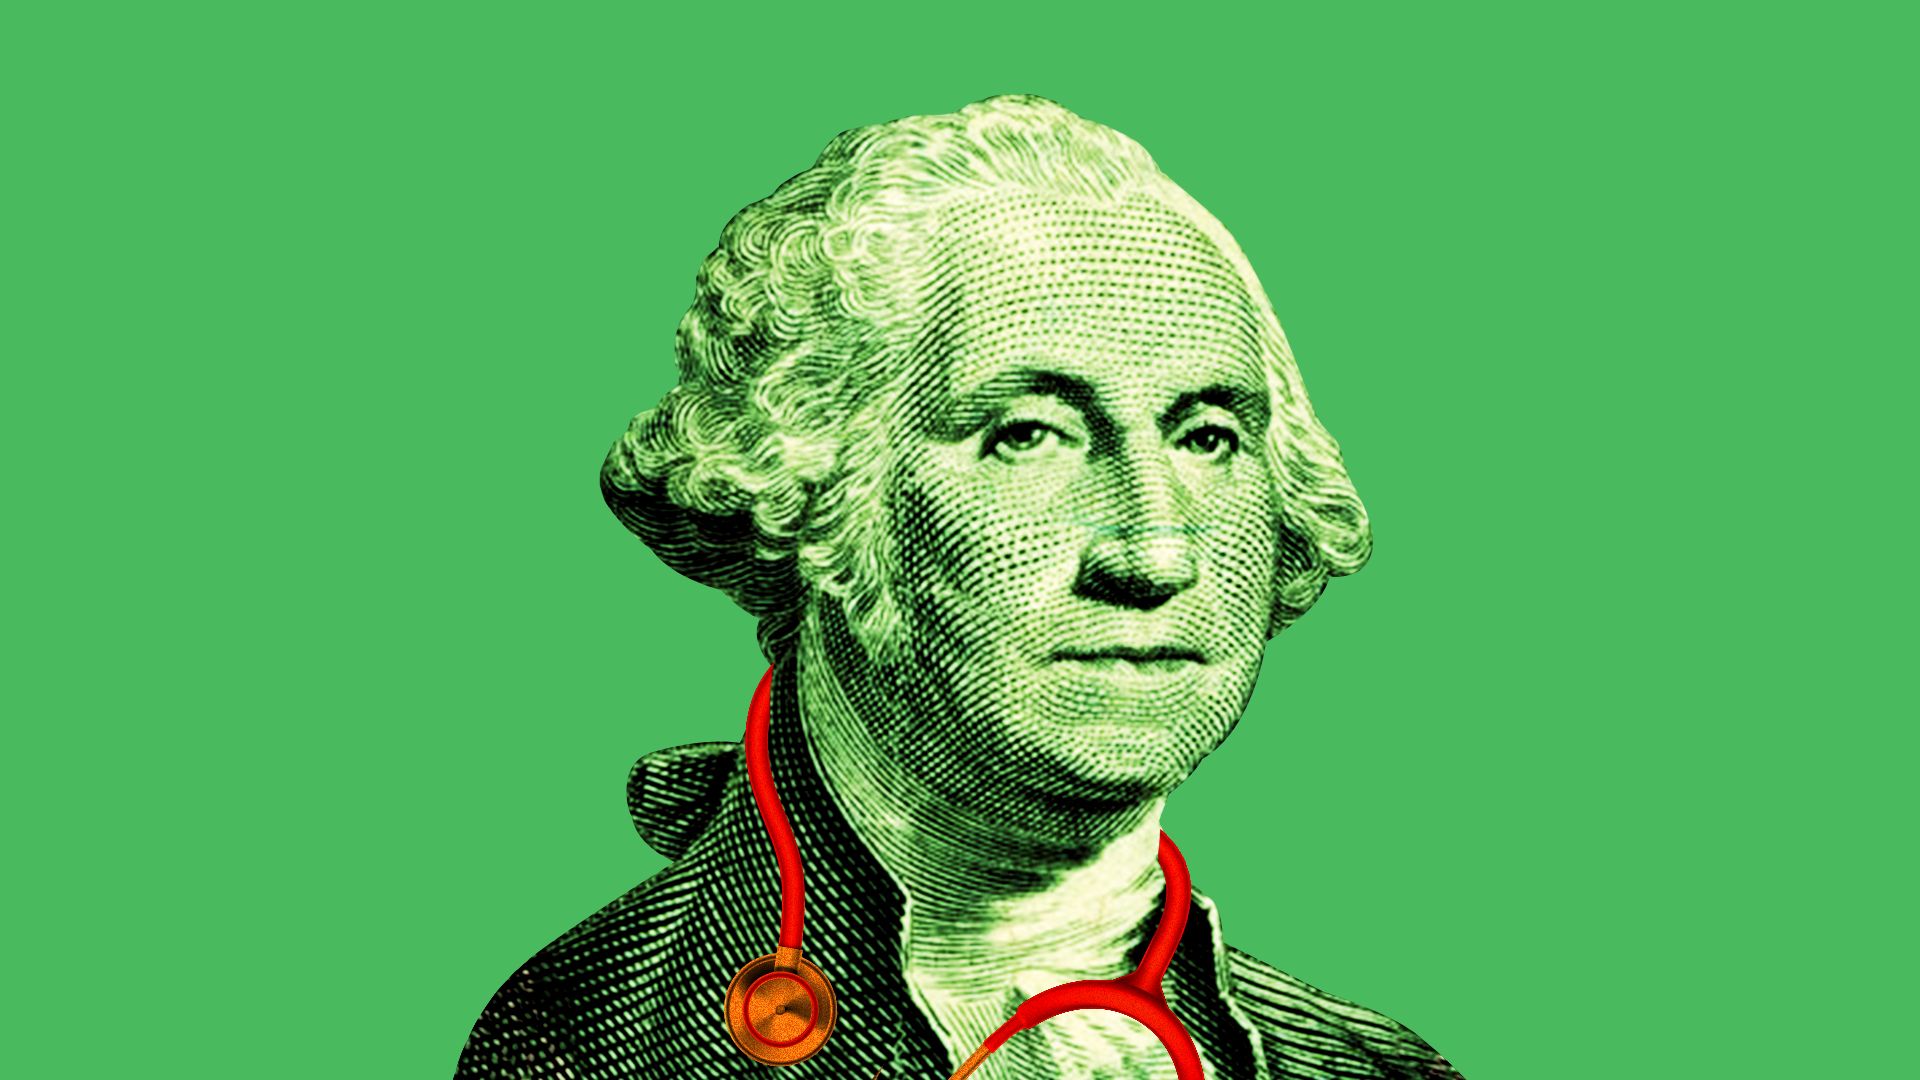 Illustration of George Washington with a stethoscope around his neck.